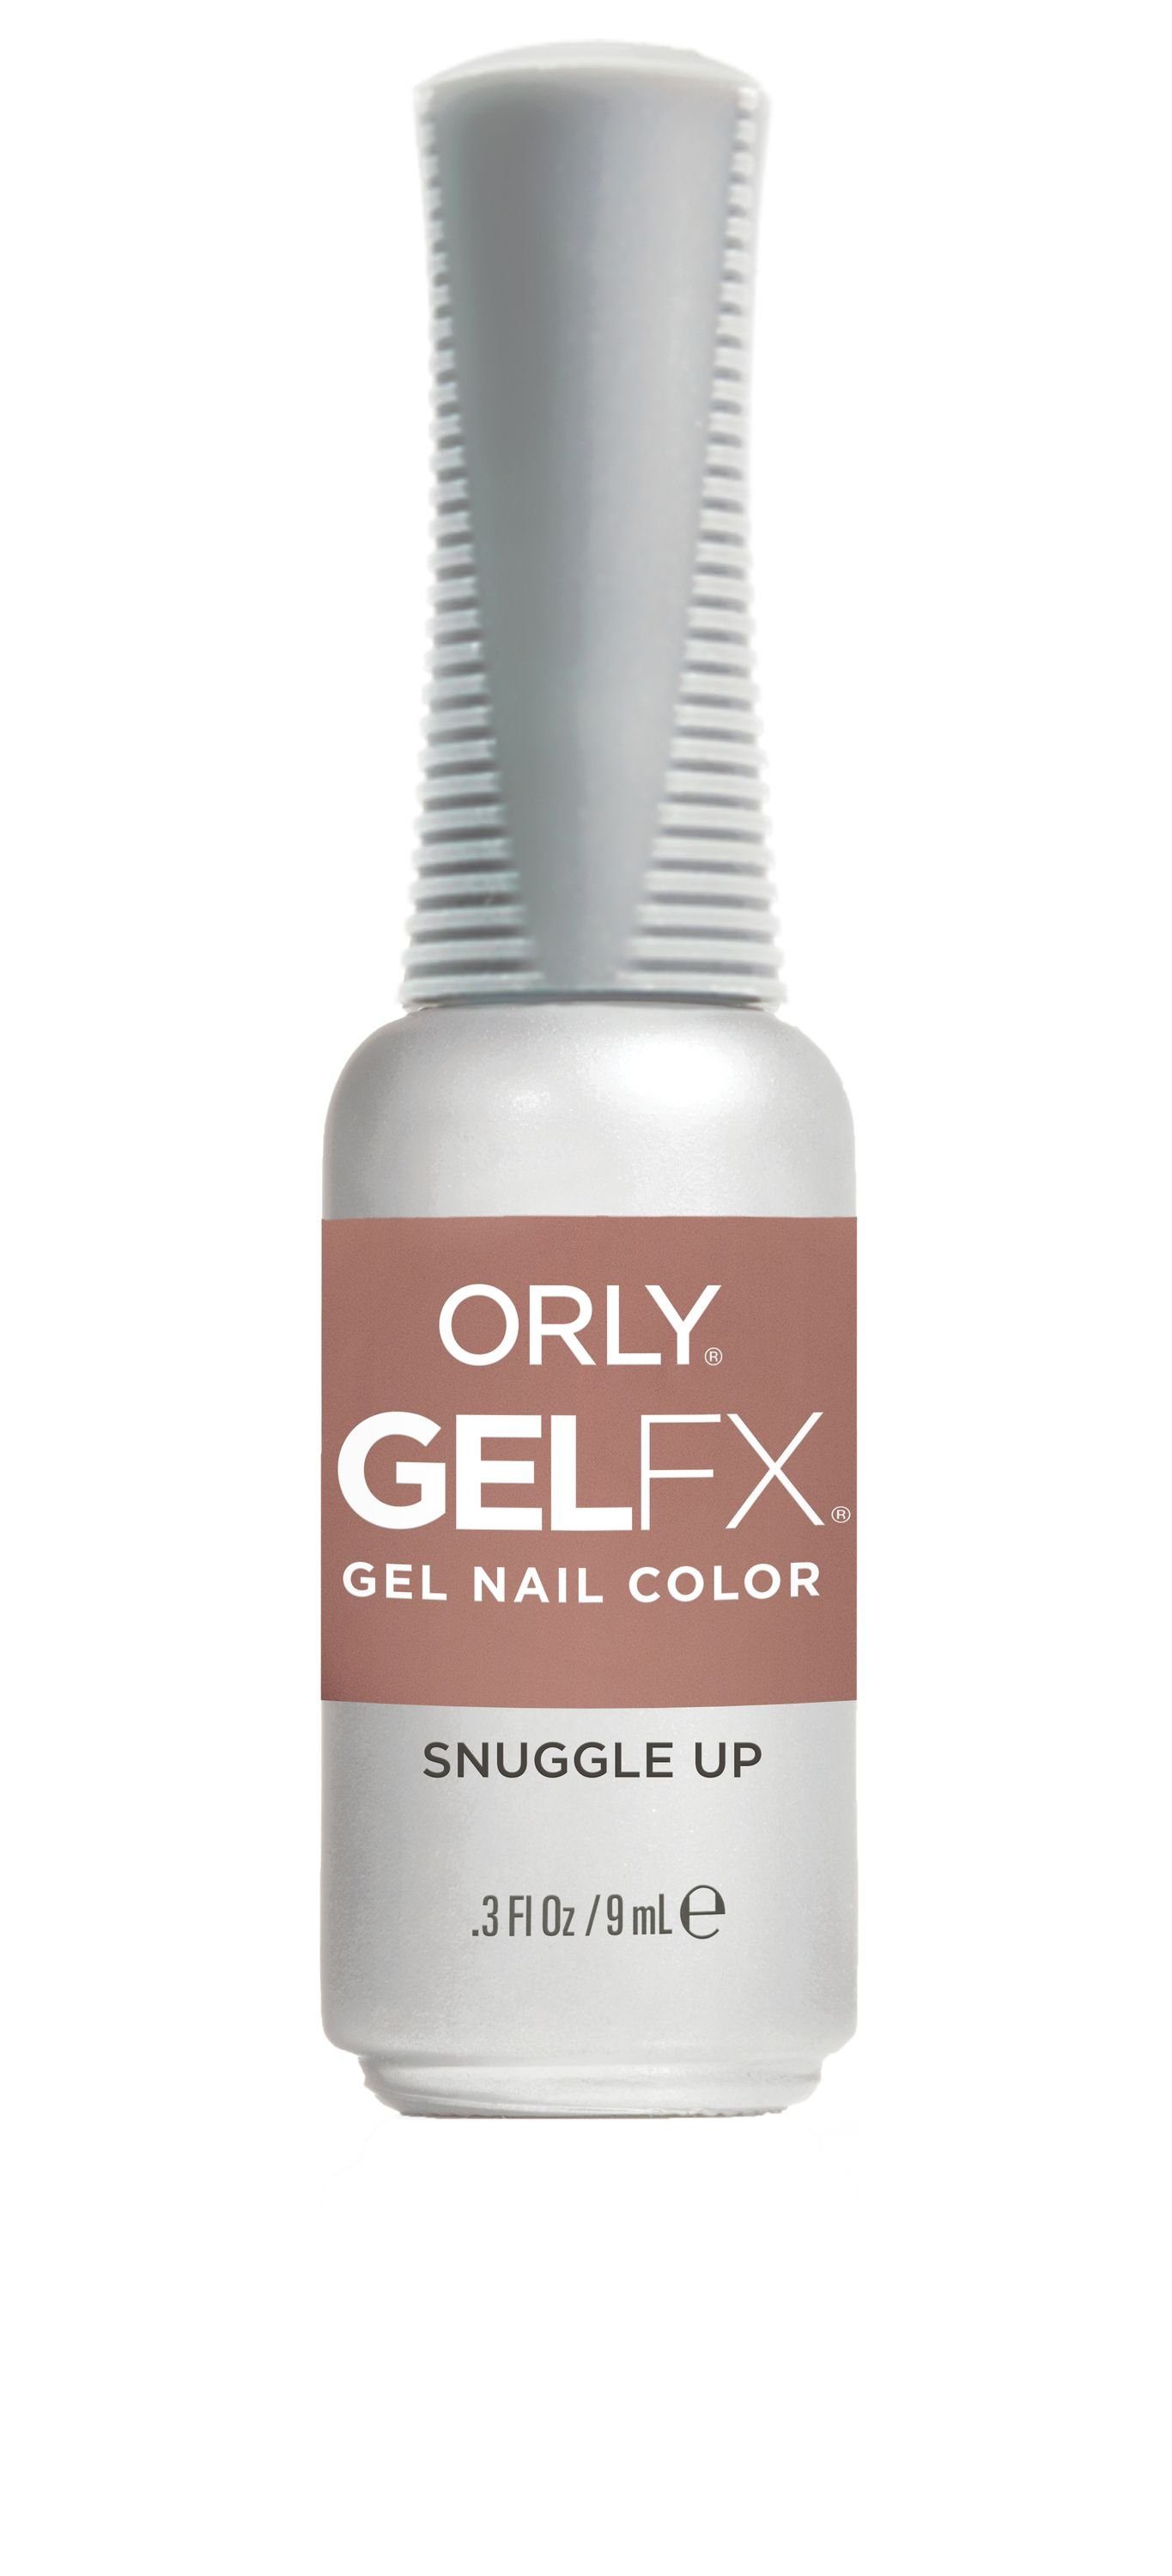 ORLY UV-Nagellack GEL FX Snuggled Up, 9ML